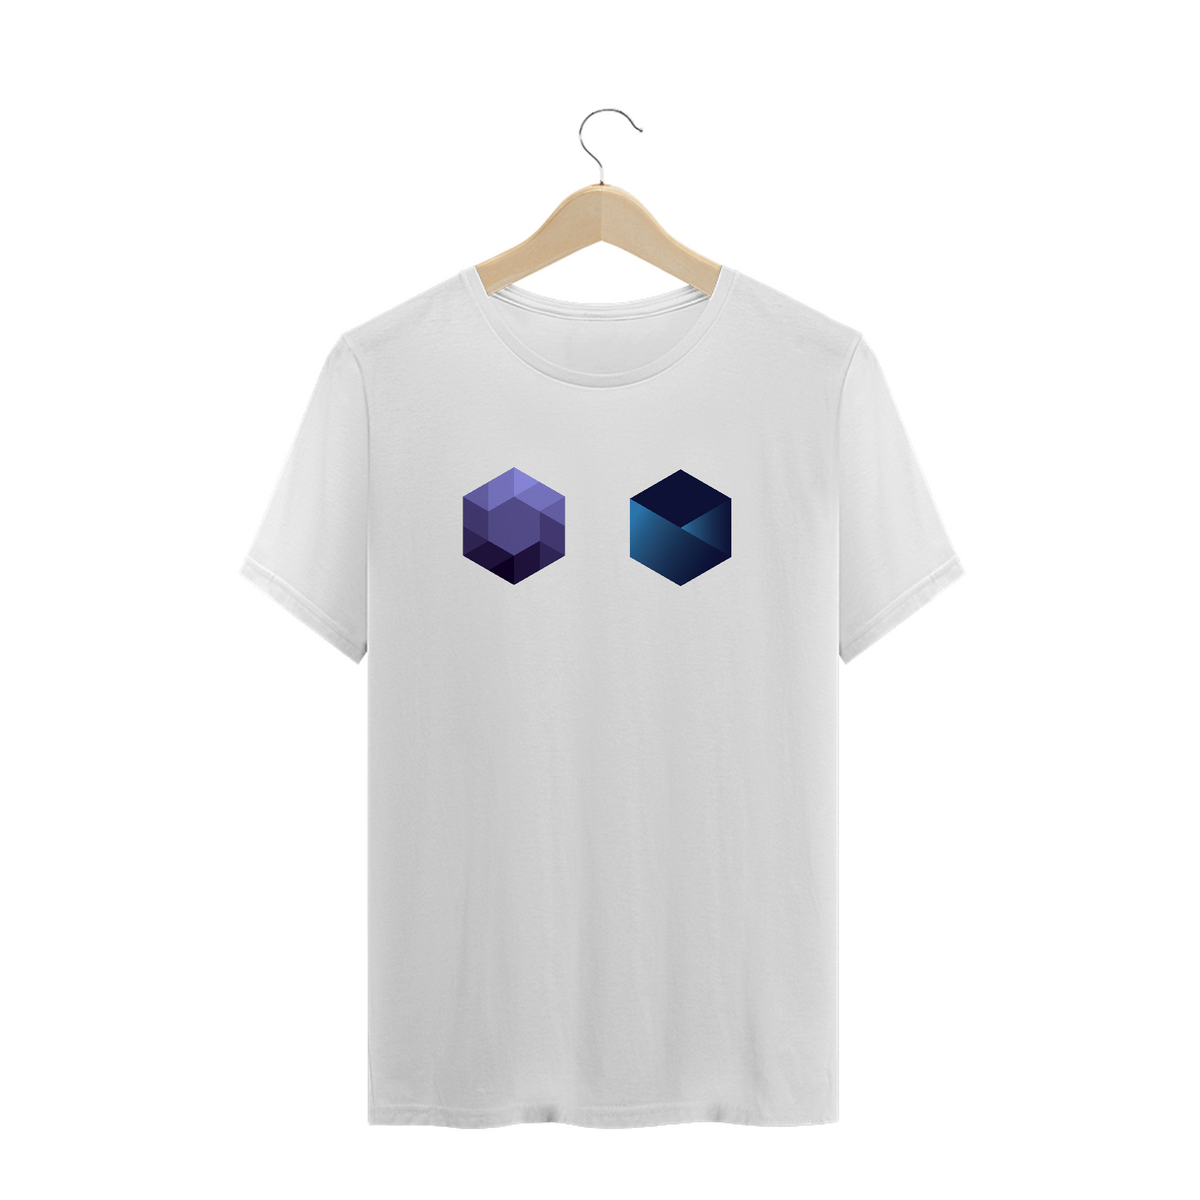 Nome do produto: Criptos - Camisa Logo Startone Gemma